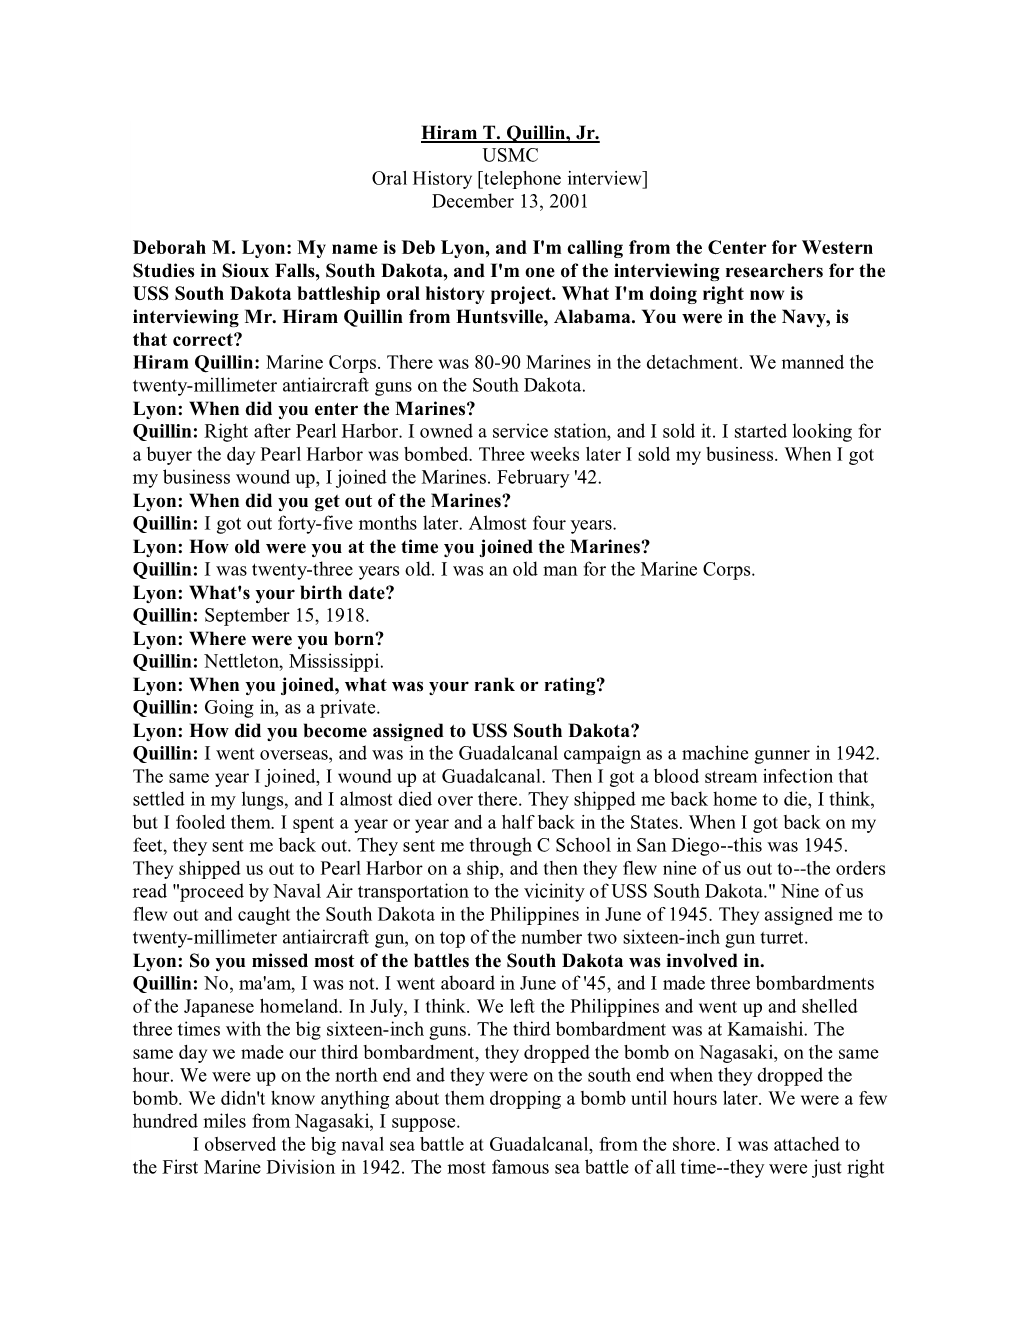 Hiram T. Quillin, Jr. USMC Oral History [Telephone Interview] December 13, 2001